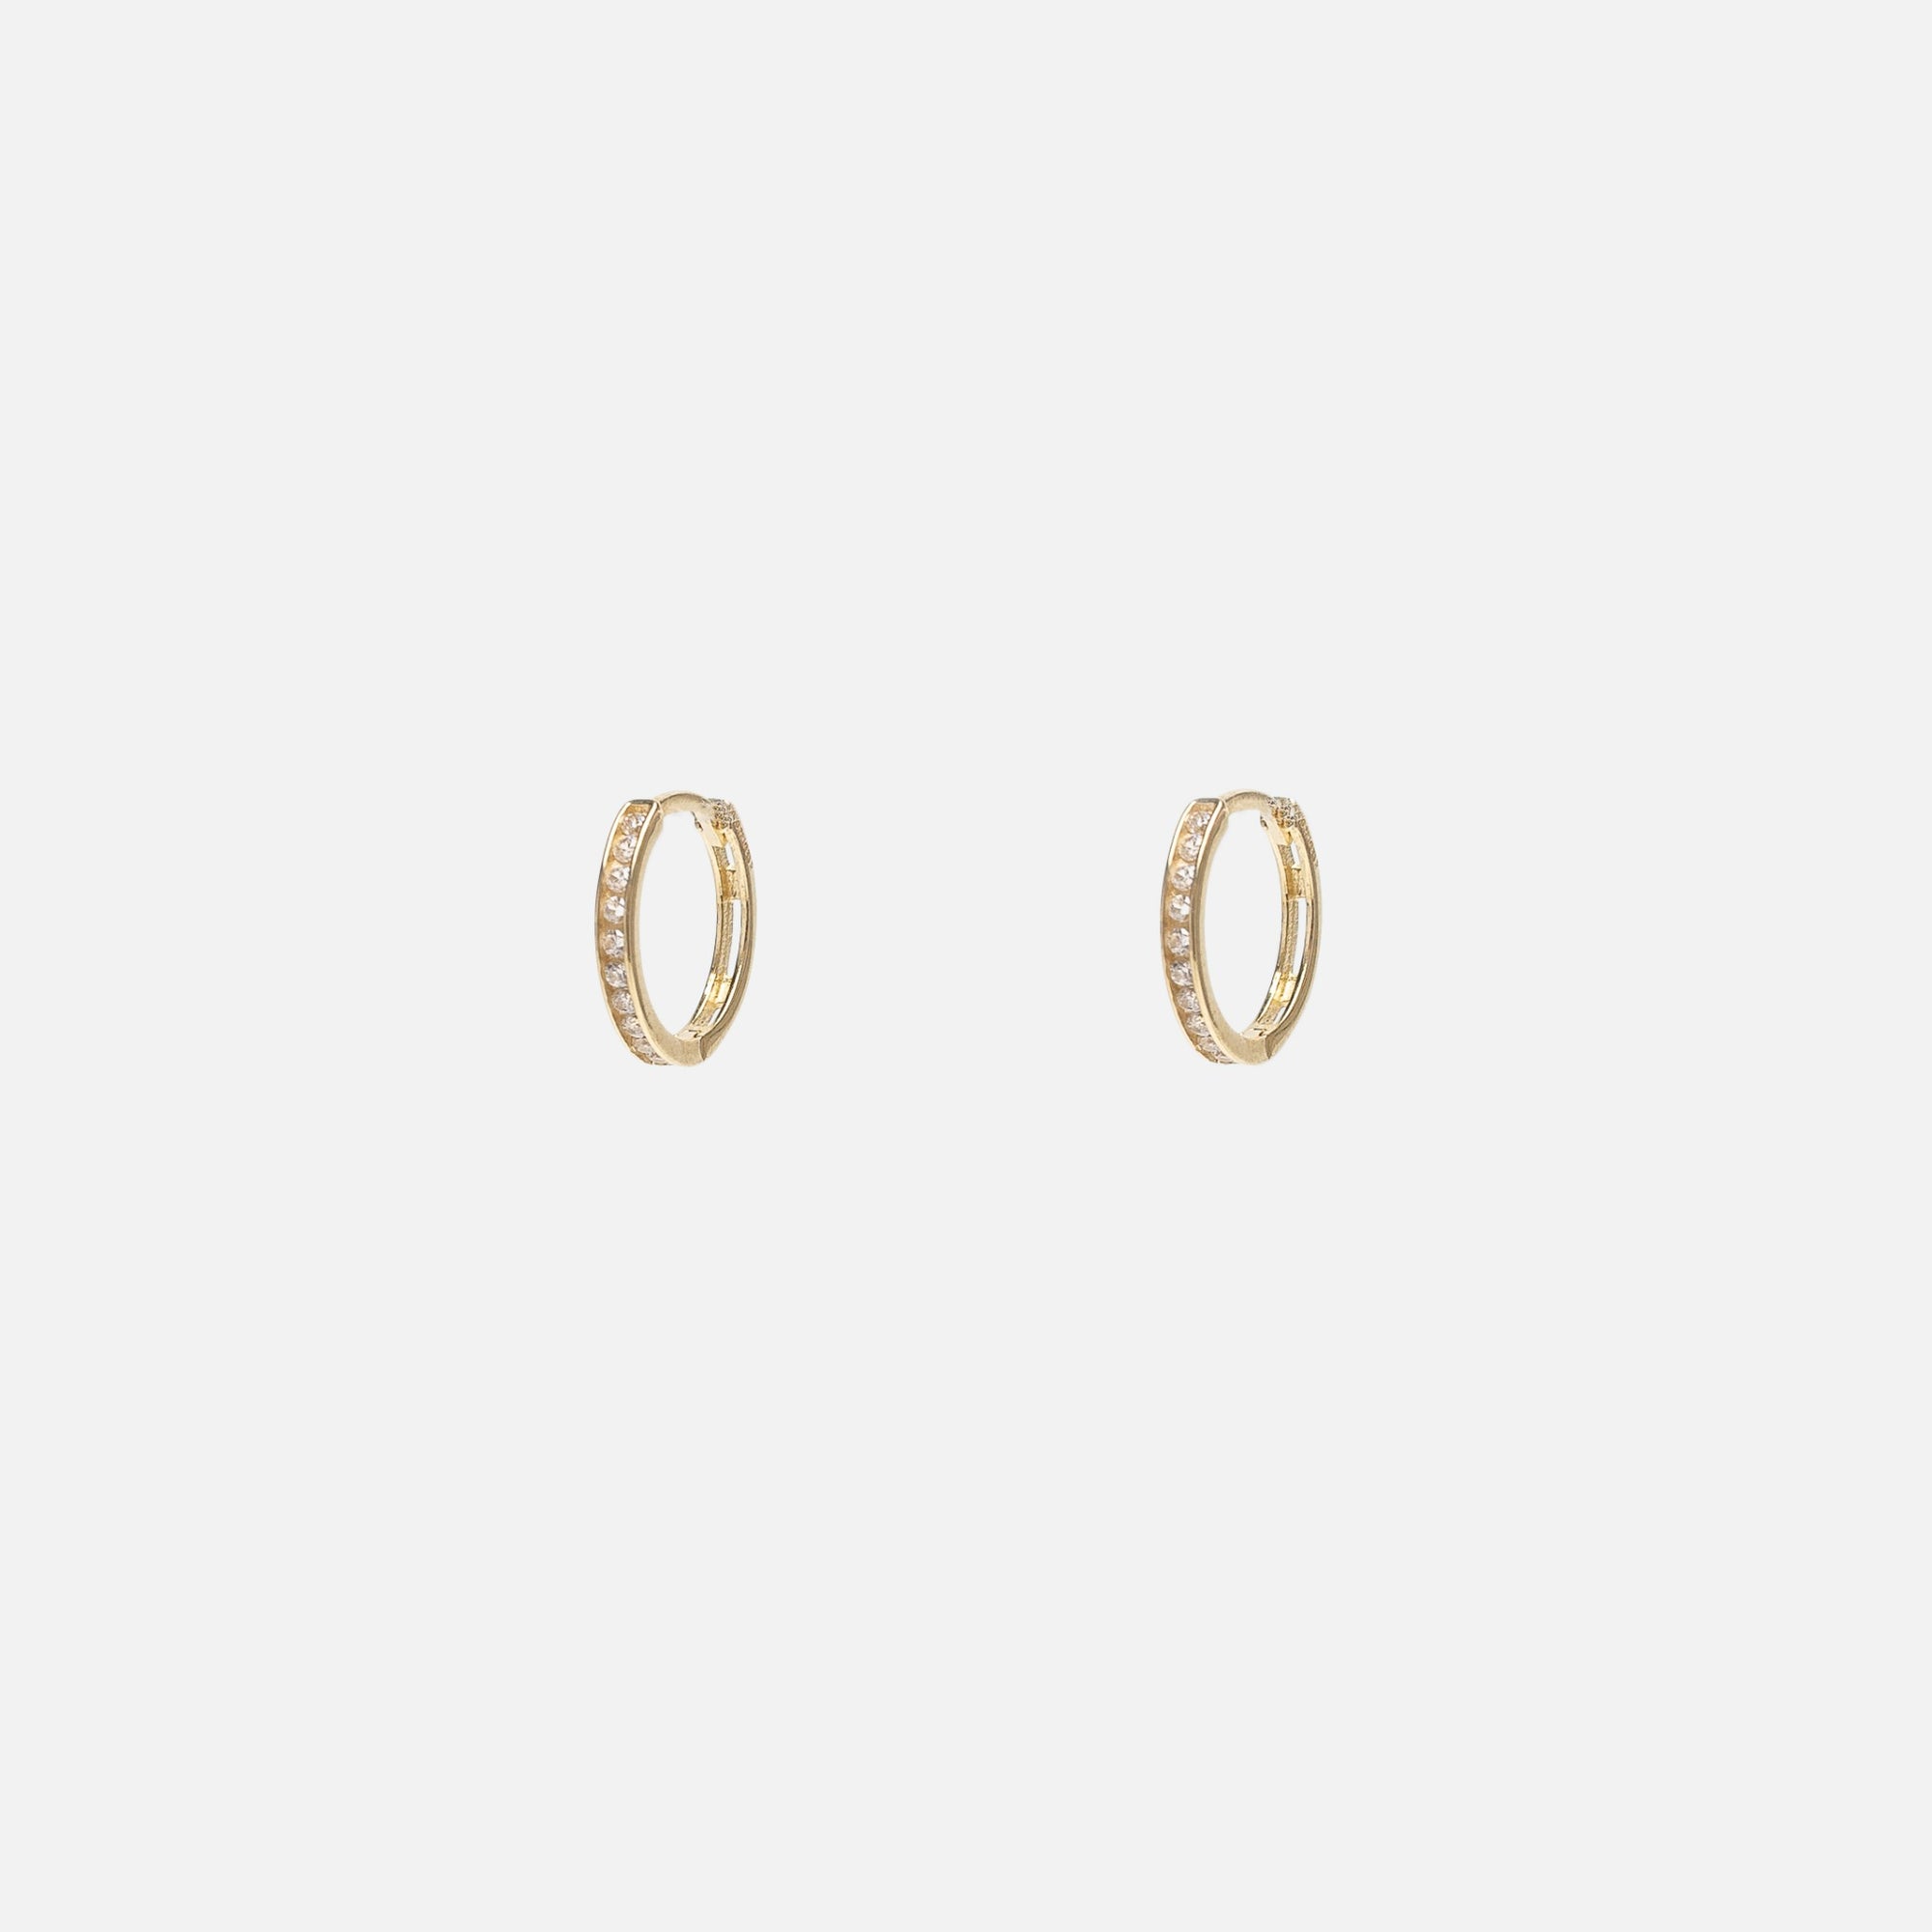 10k yellow gold 13 mm hoop earrings with cubic zirconia